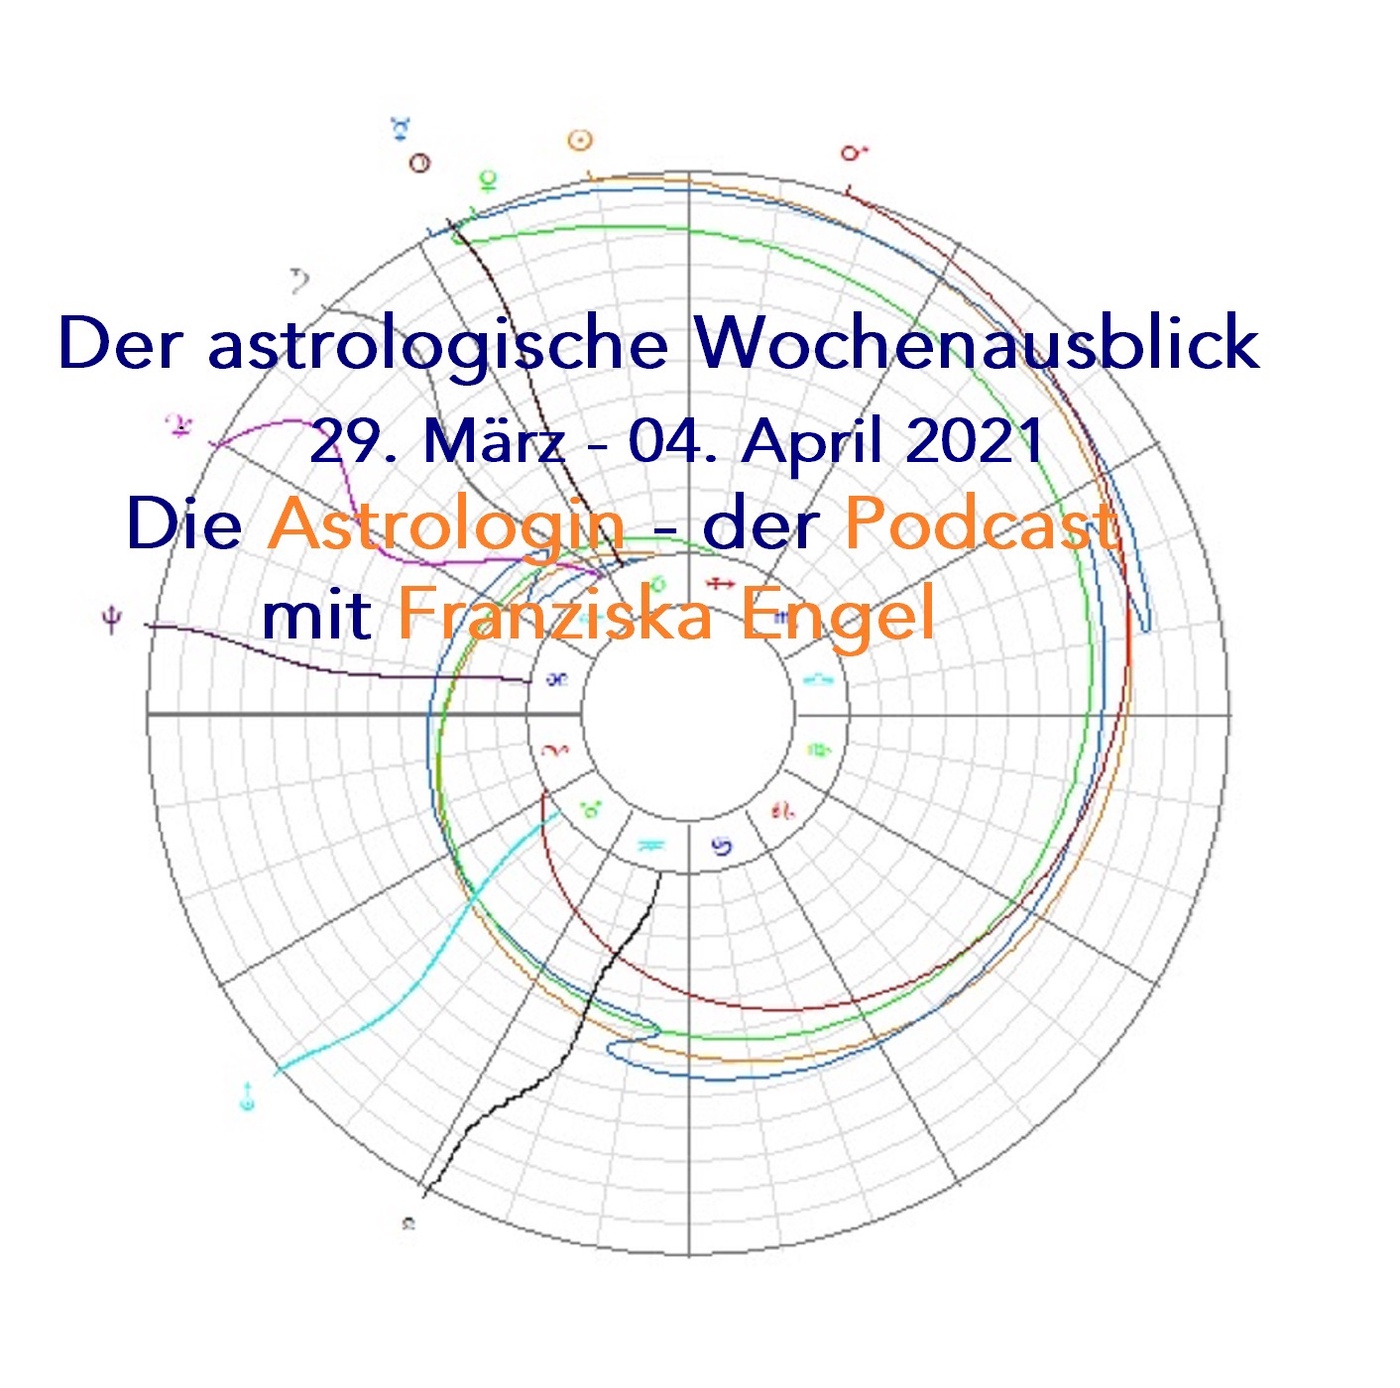 Astrologischer Wochenausblick 29. März - 04. April 2021